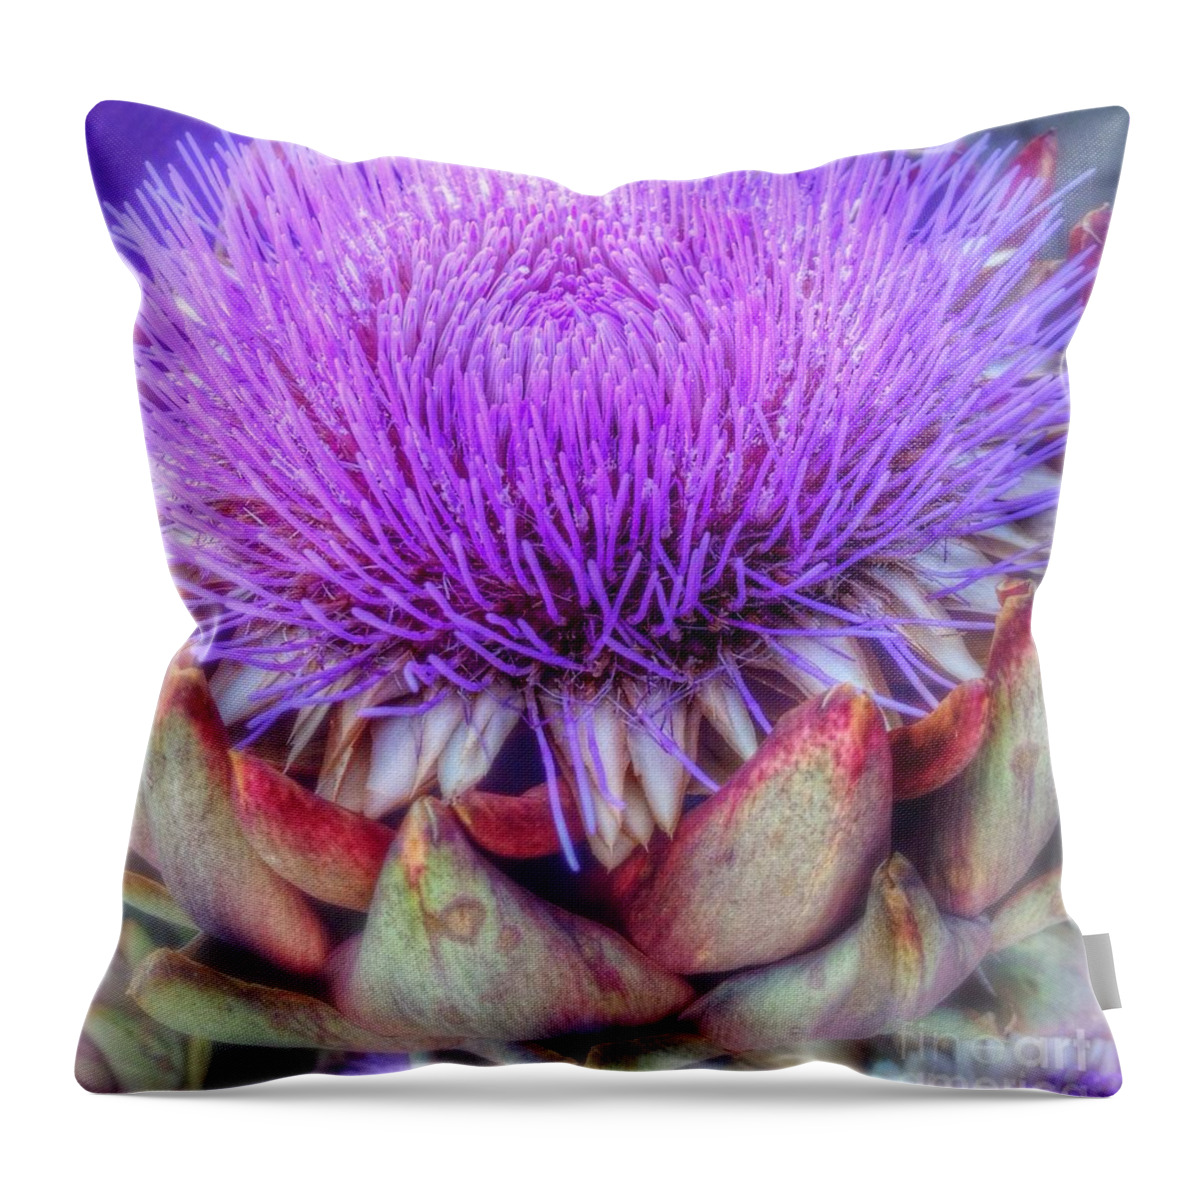 Flowering Artichoke Throw Pillow featuring the photograph Flowering Artichoke by Susan Garren